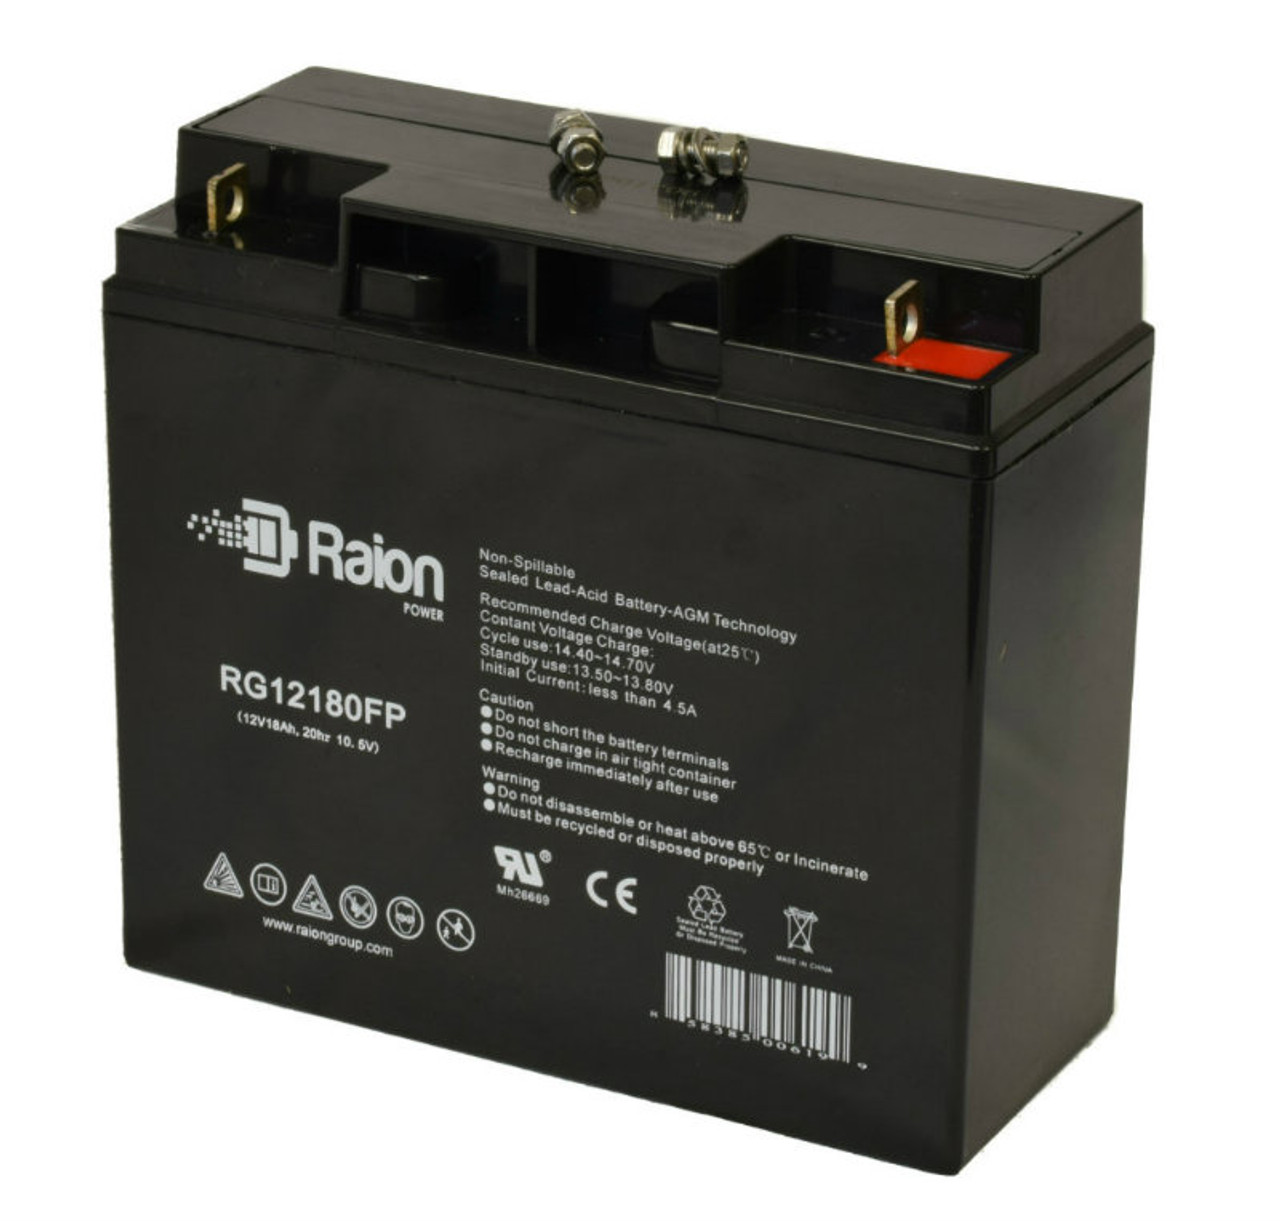 Raion Power Replacement 12V 18Ah Battery for Firman 7125 Watt P05702 Generator - 1 Pack